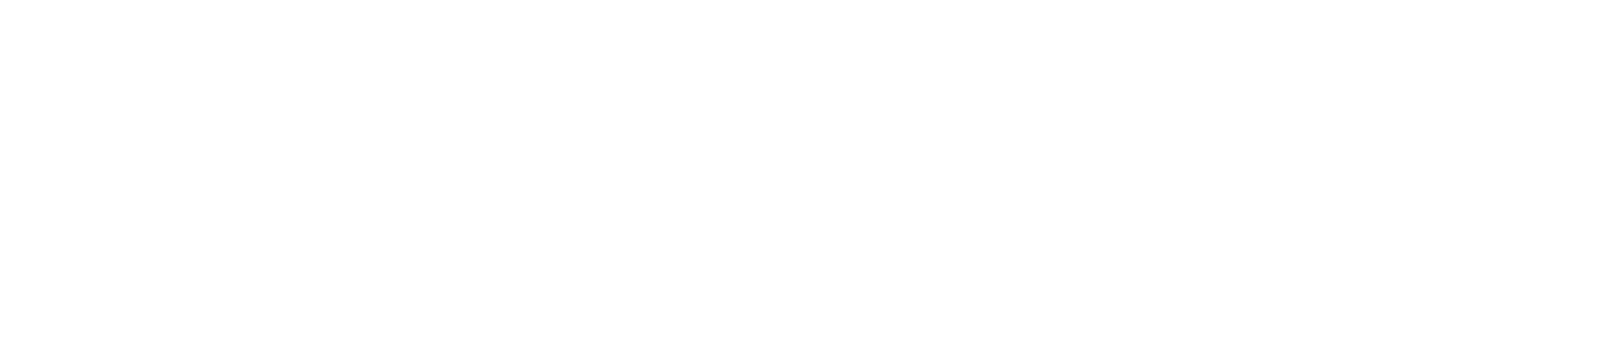 steele cooper law logo